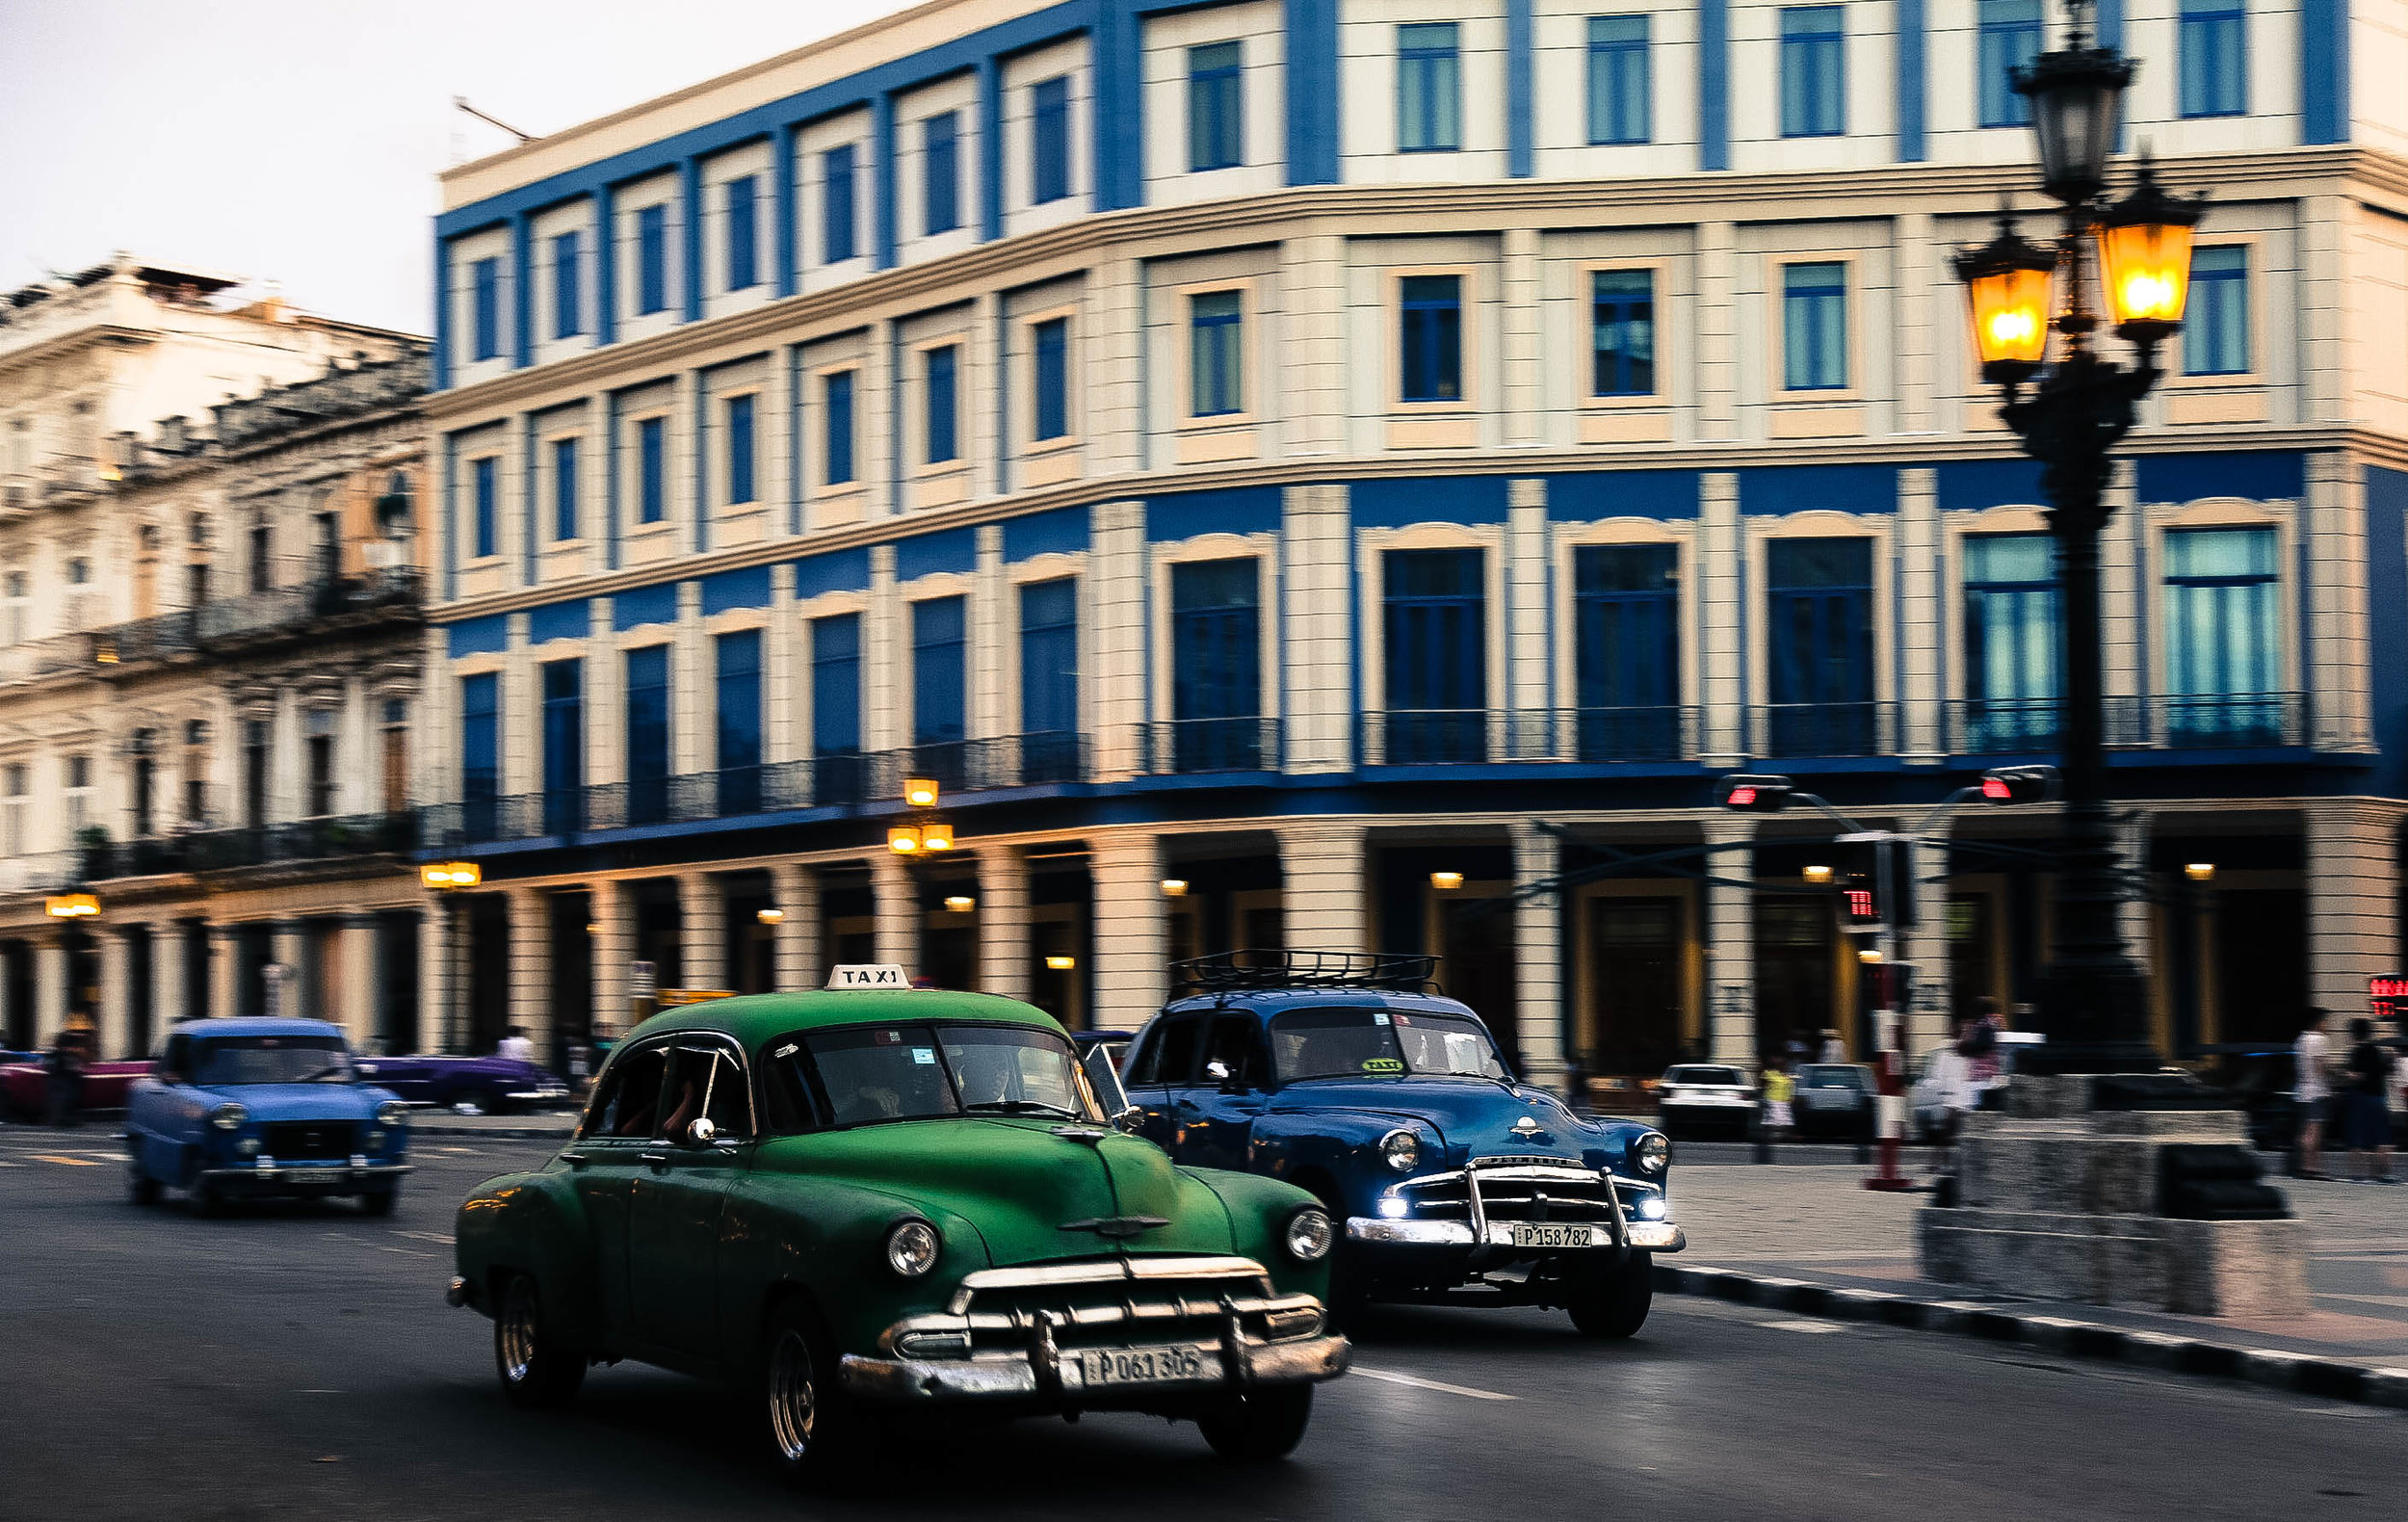 2017 / Havana